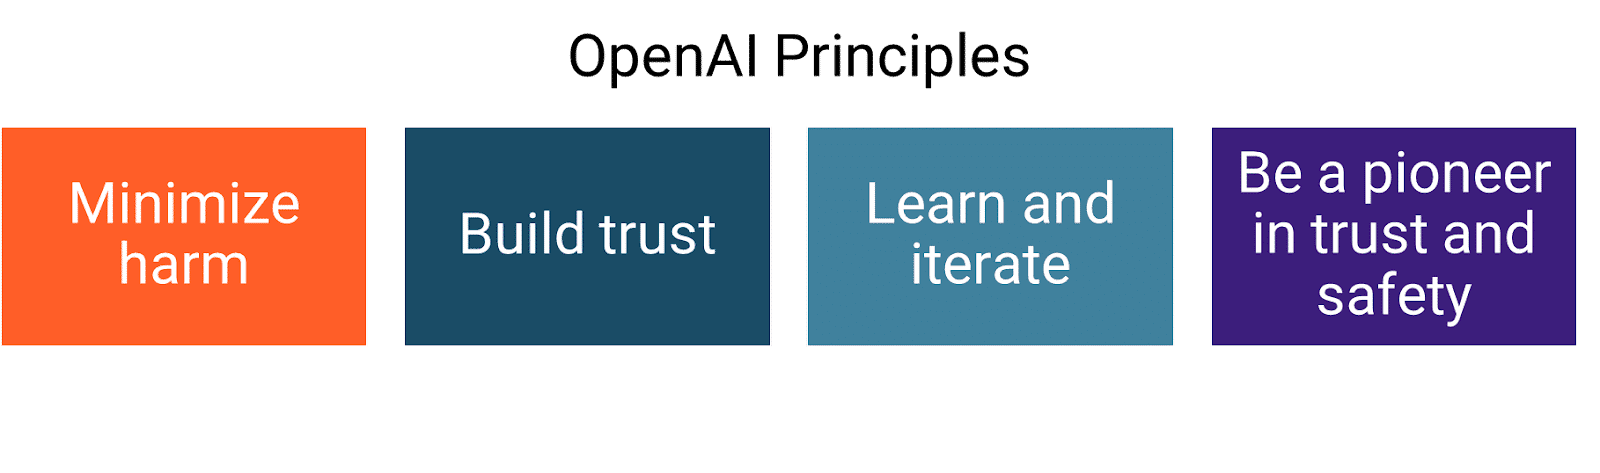 OpenAI principles